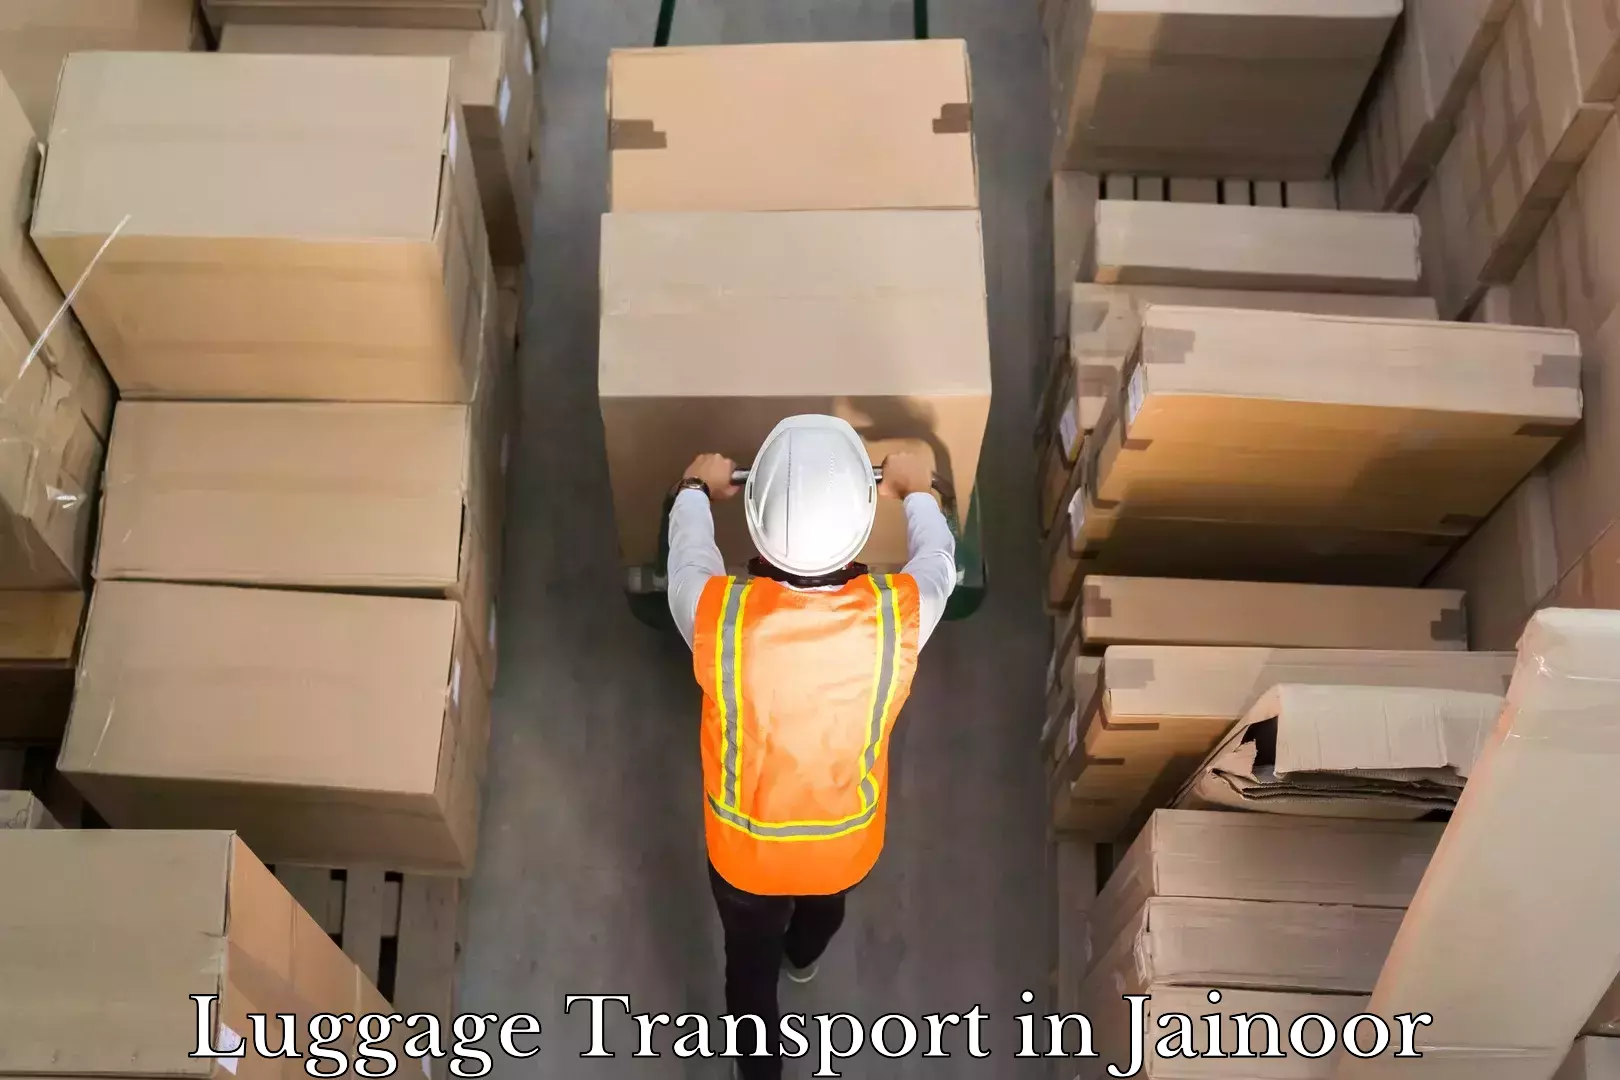 Baggage shipping experience in Jainoor